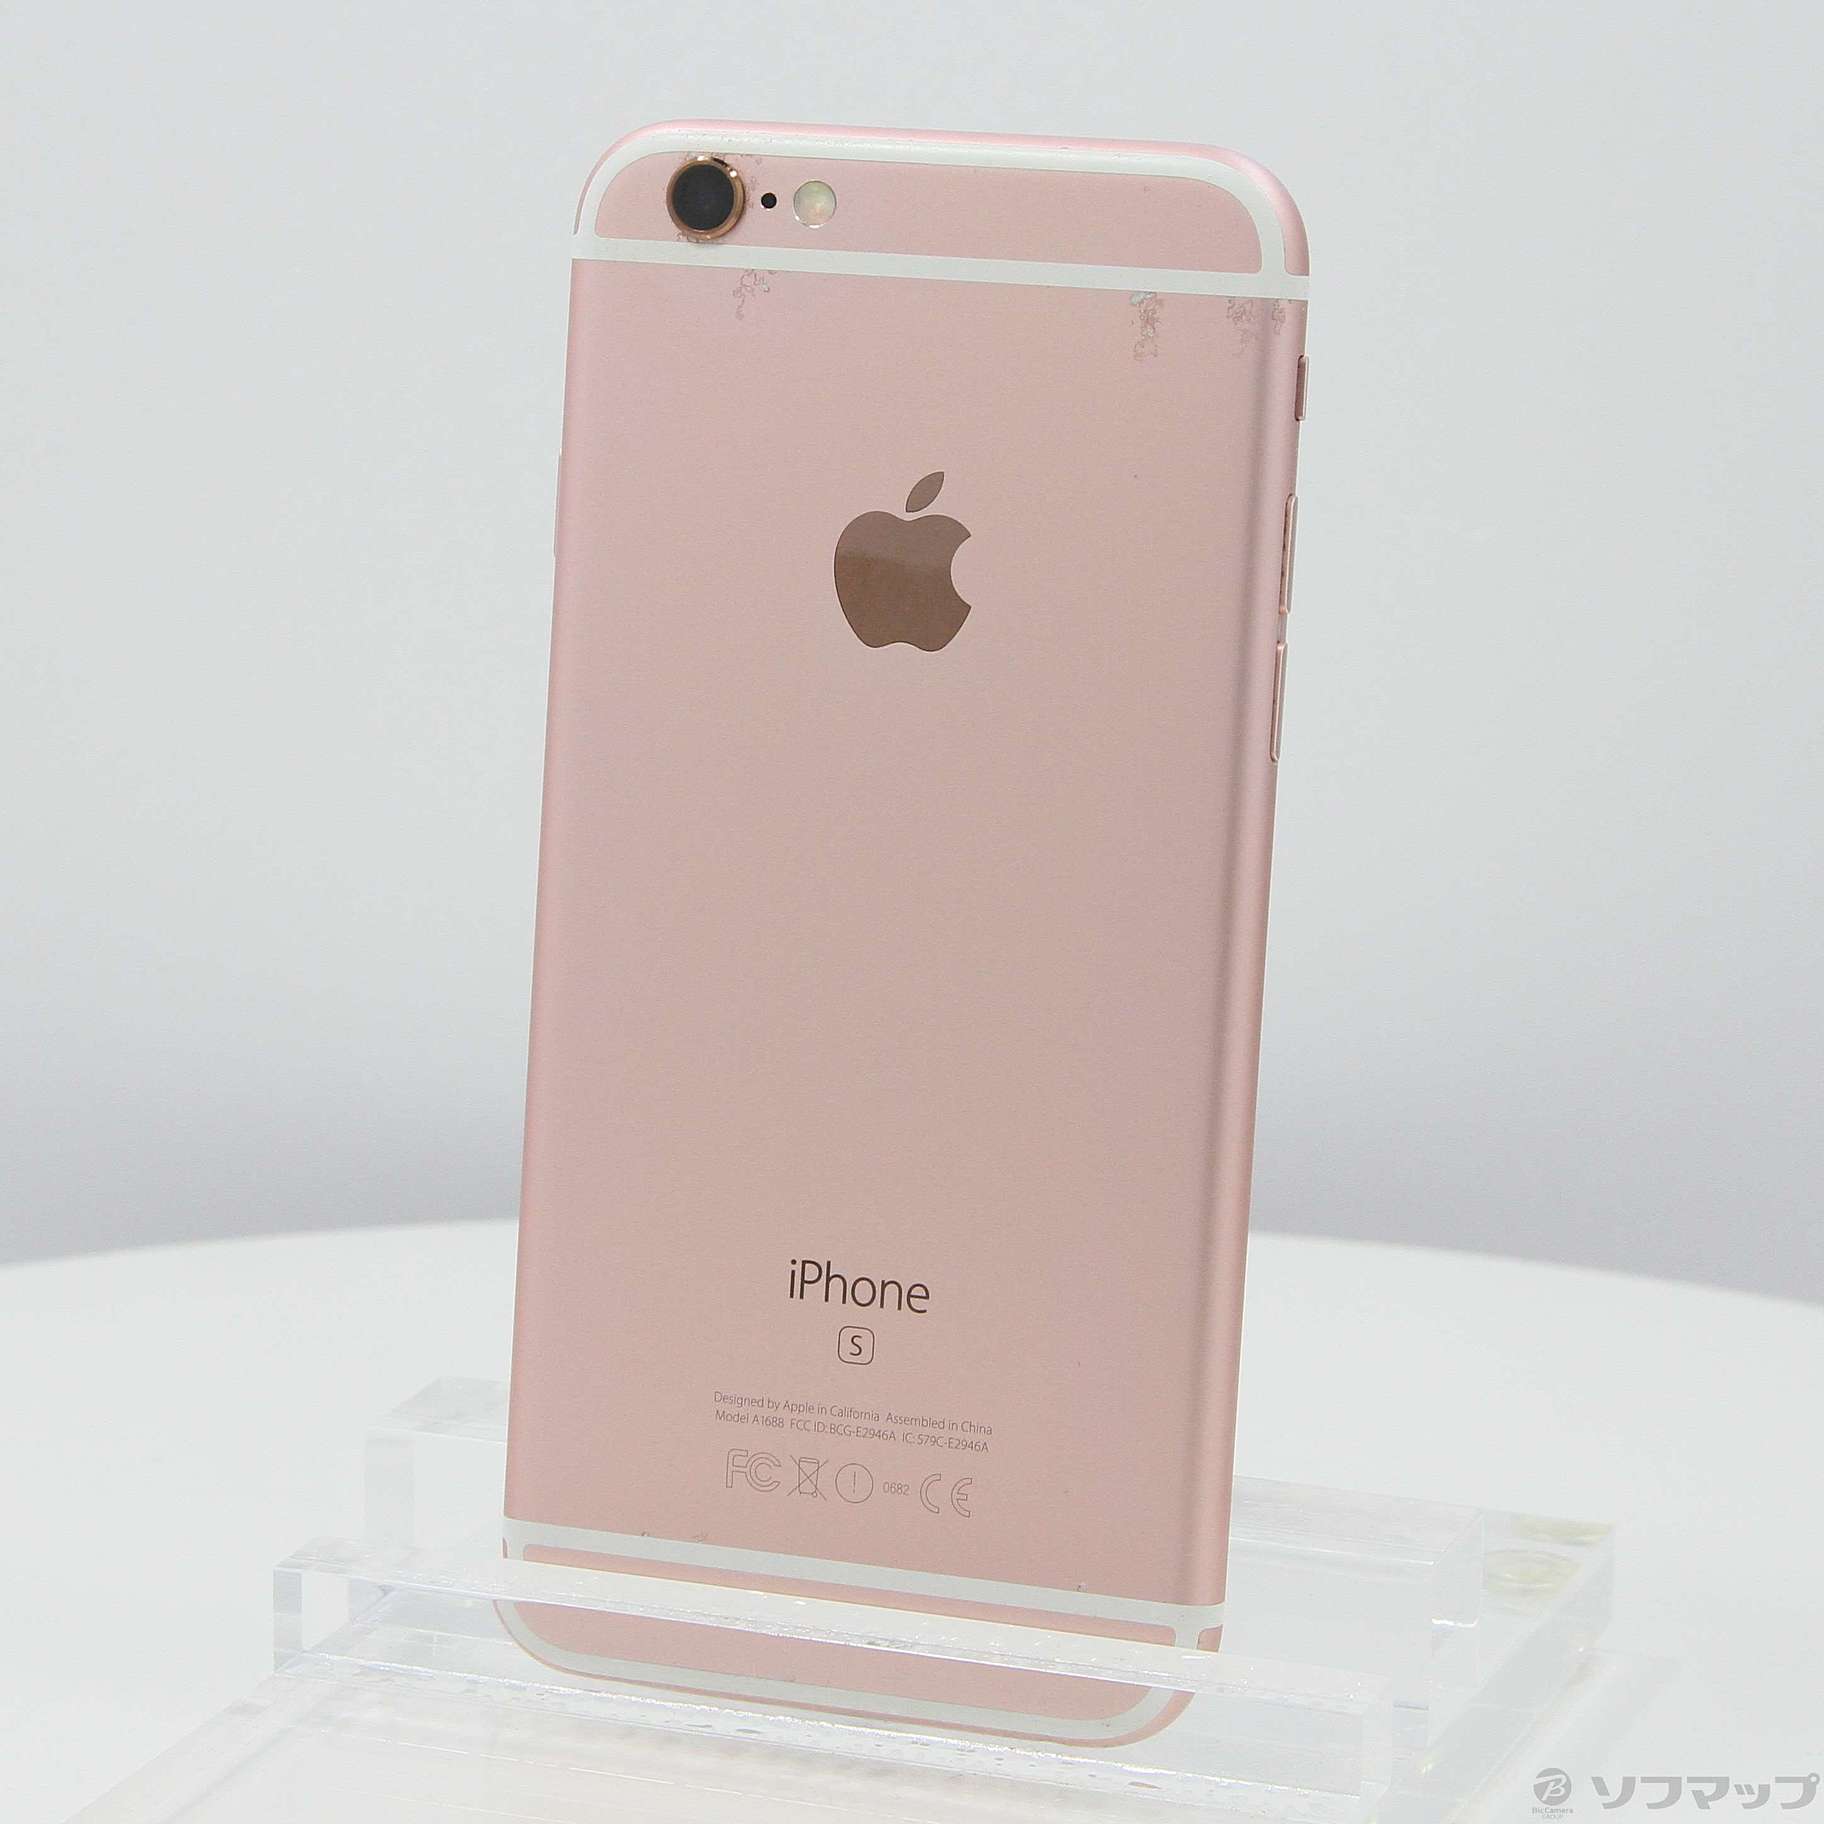 iPhone 6s Gold 16 GB Softbank